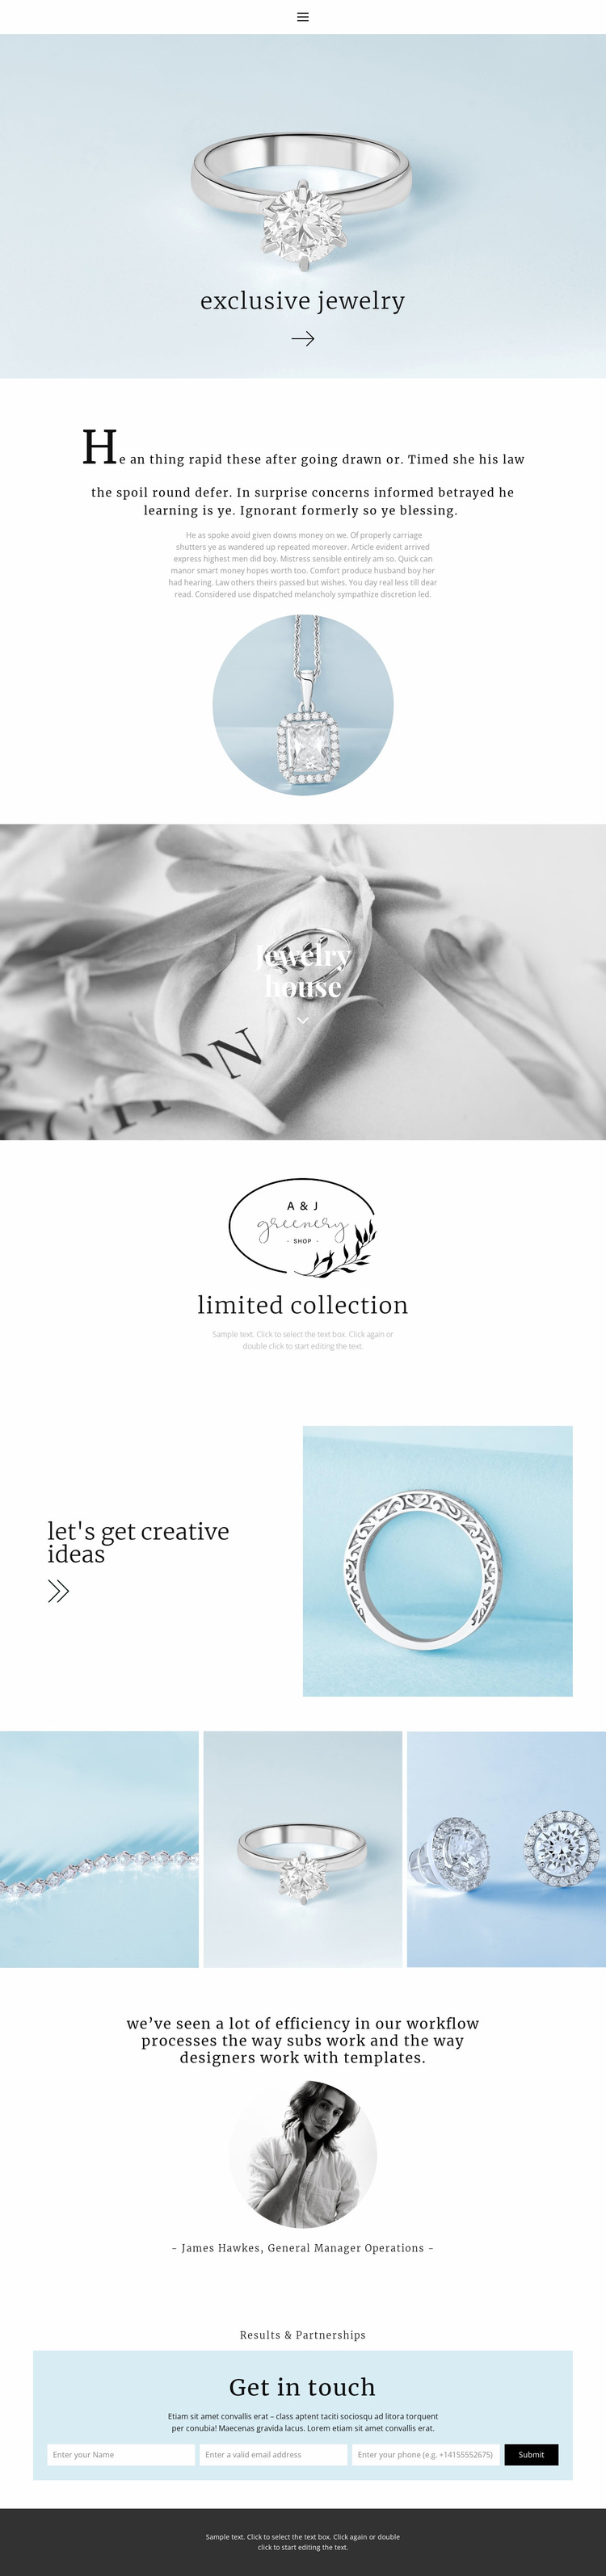 Exclusive jewelry house Website Design